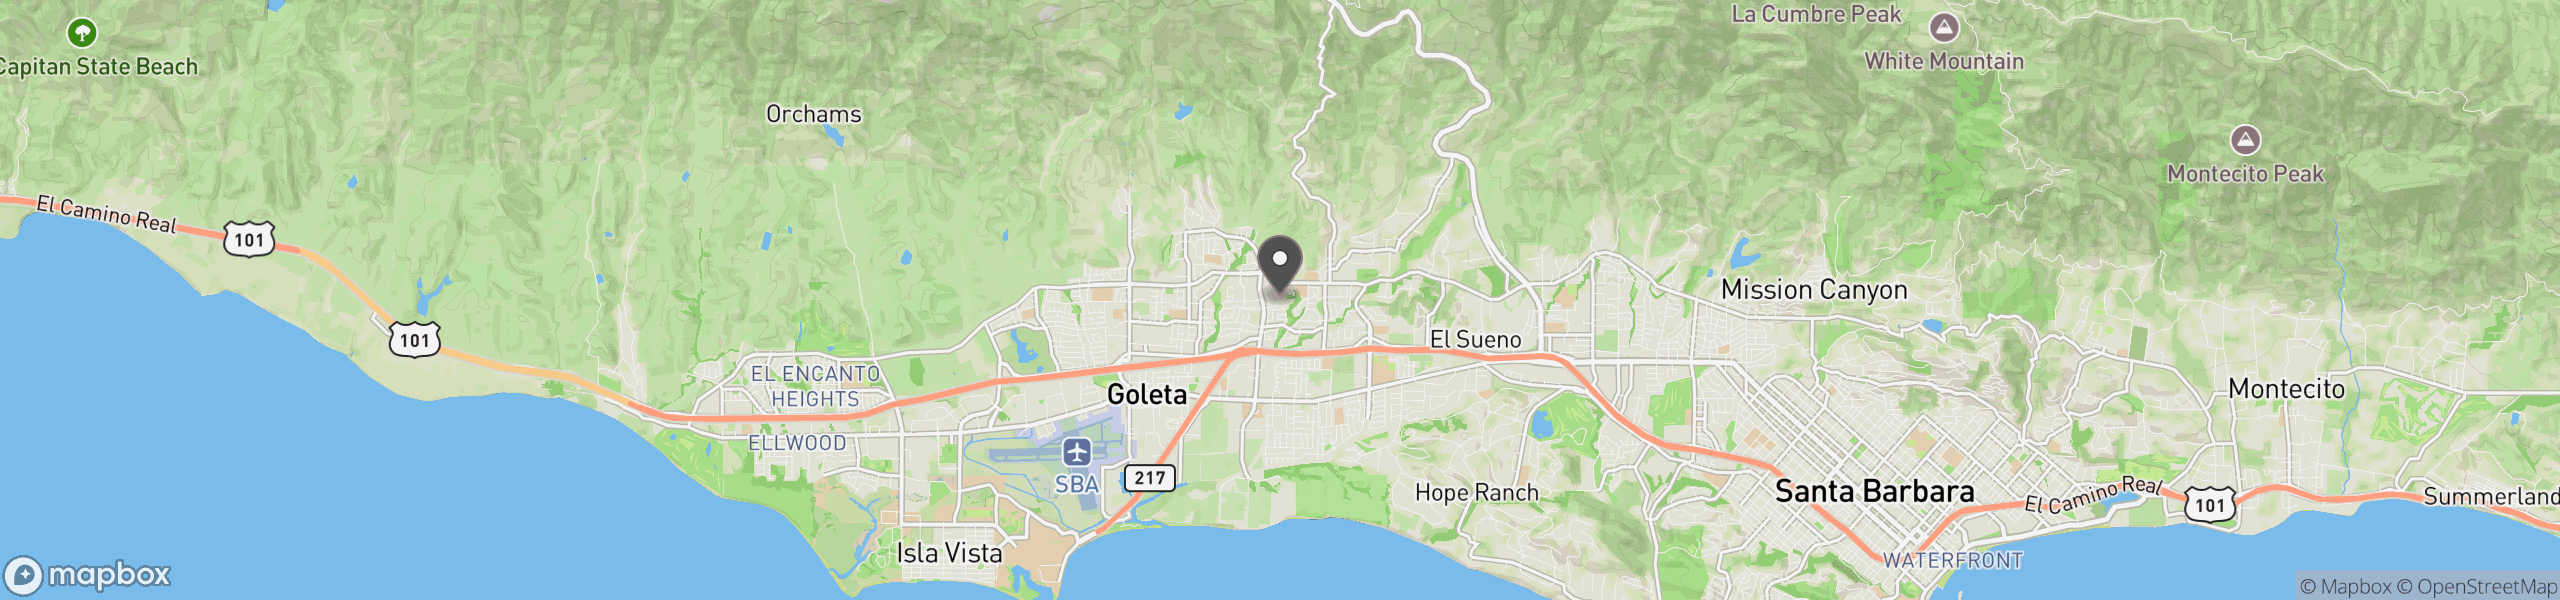 Santa Barbara, CA 93111